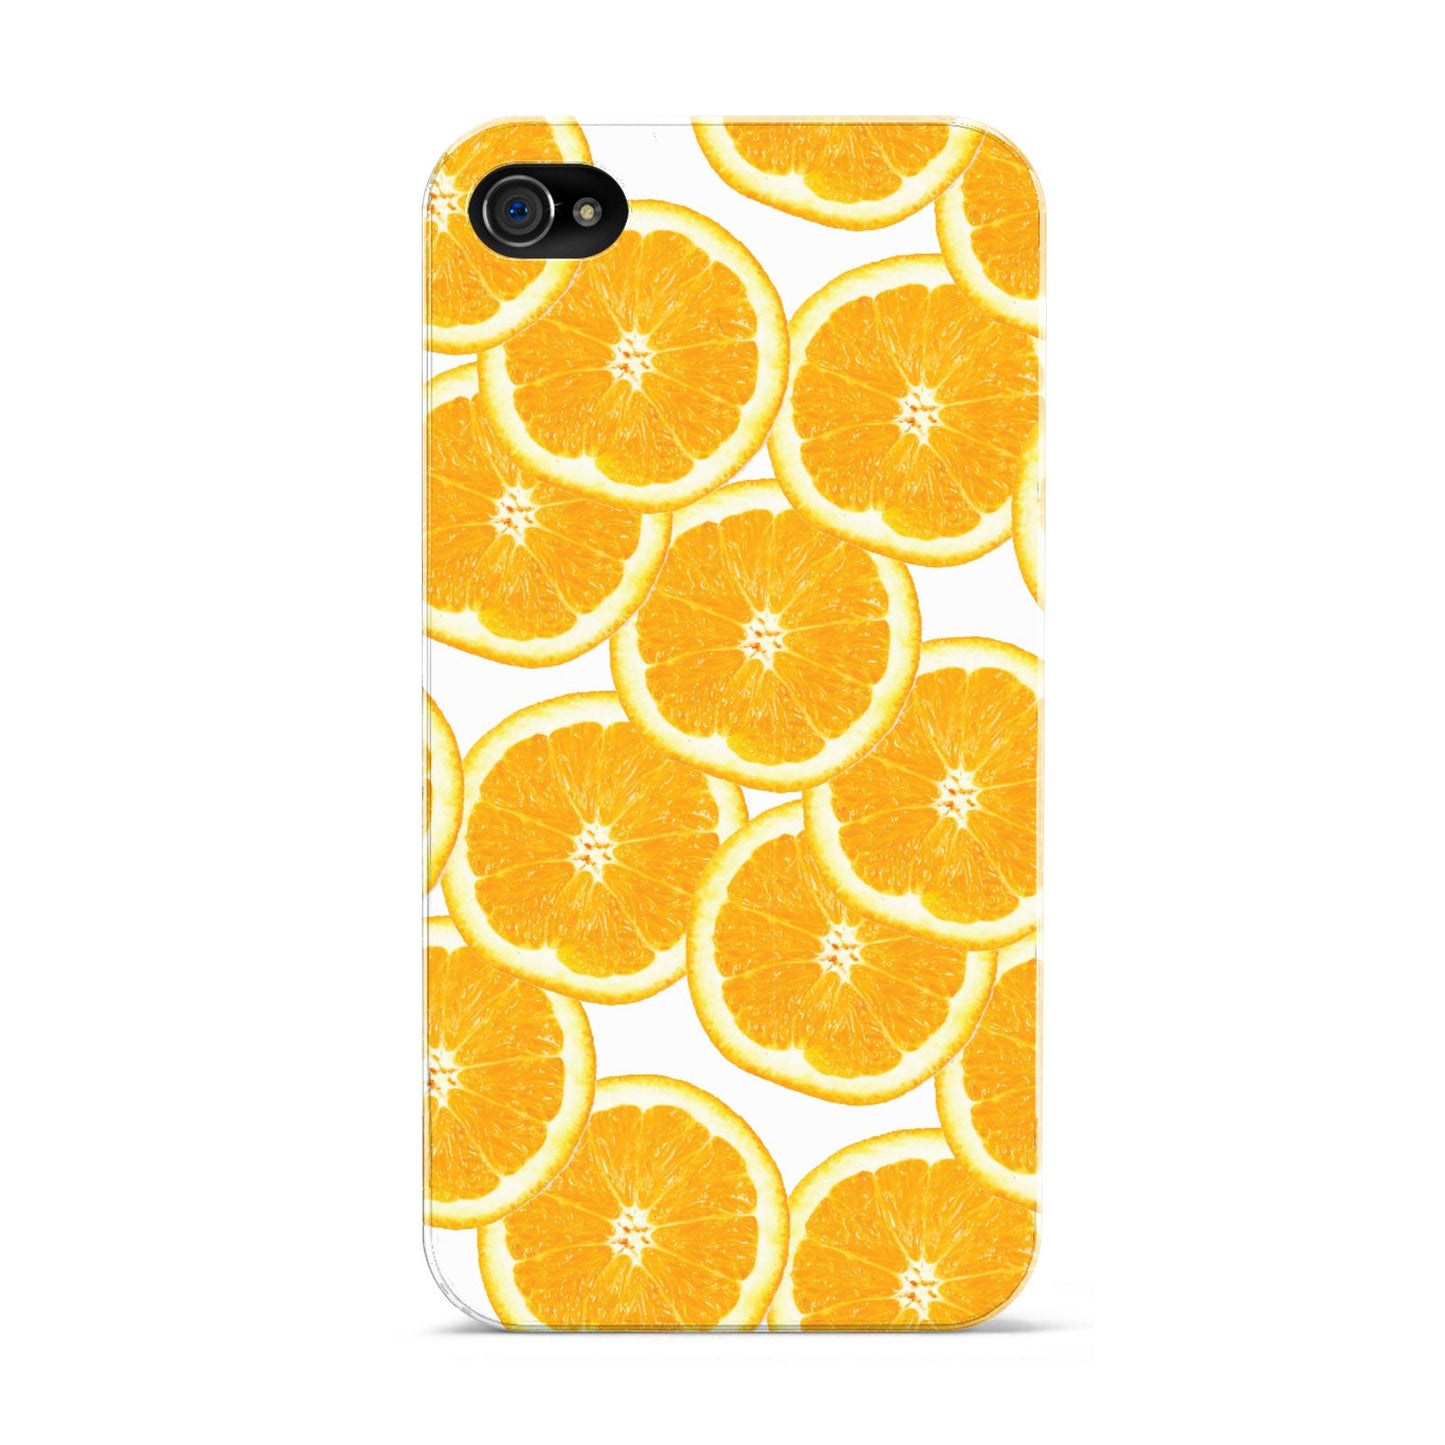 Orange Fruit Slices Apple iPhone 4s Case